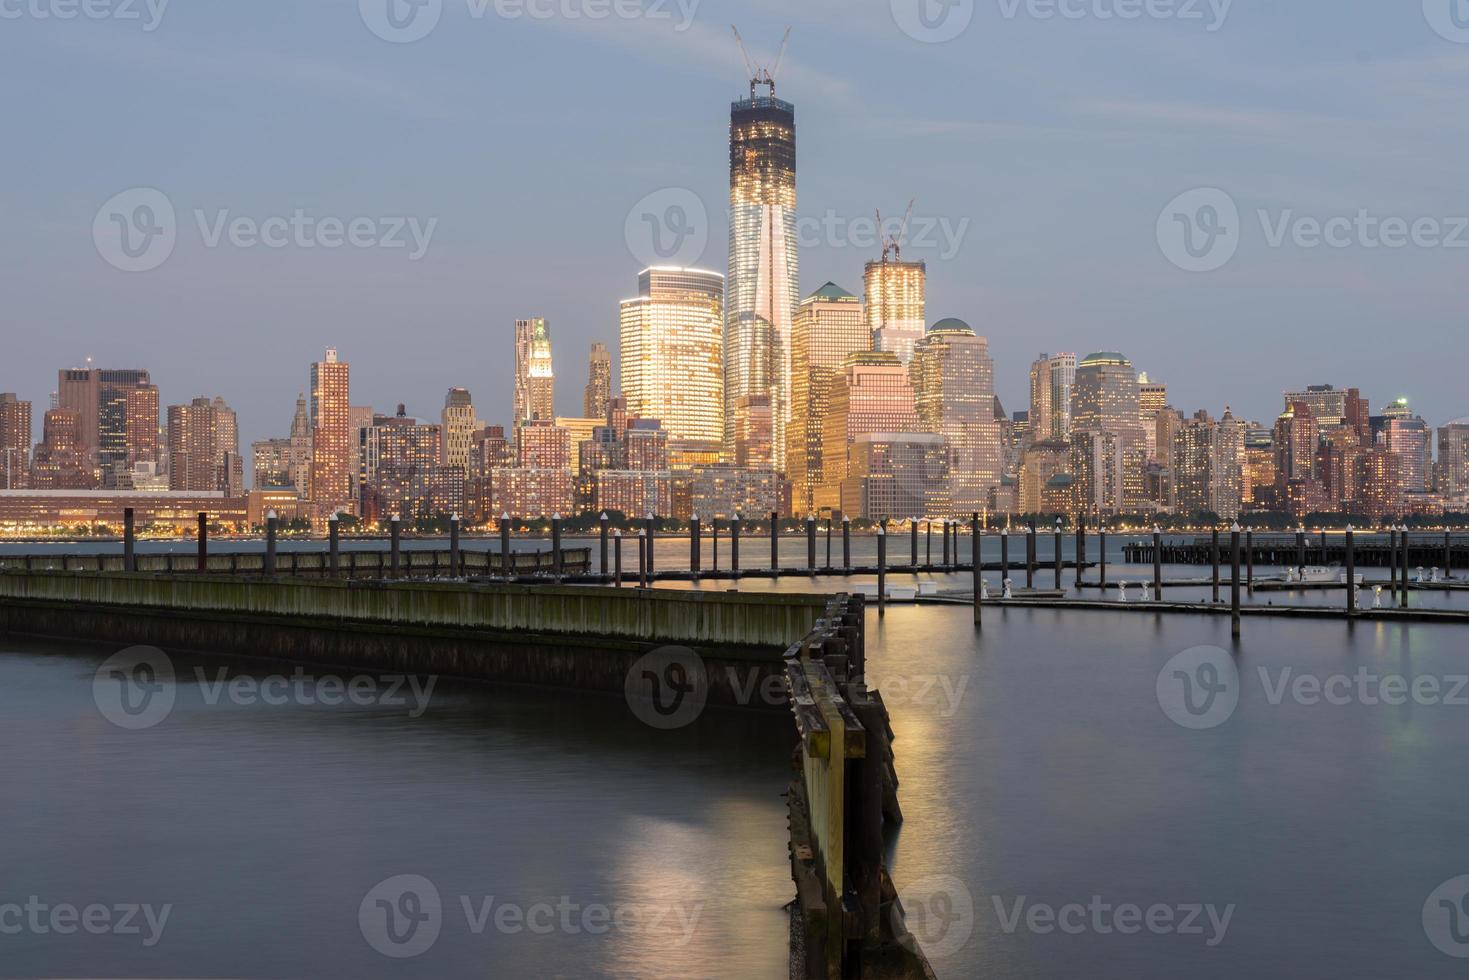 New York Skyline from Jersey City, New Jersey. photo